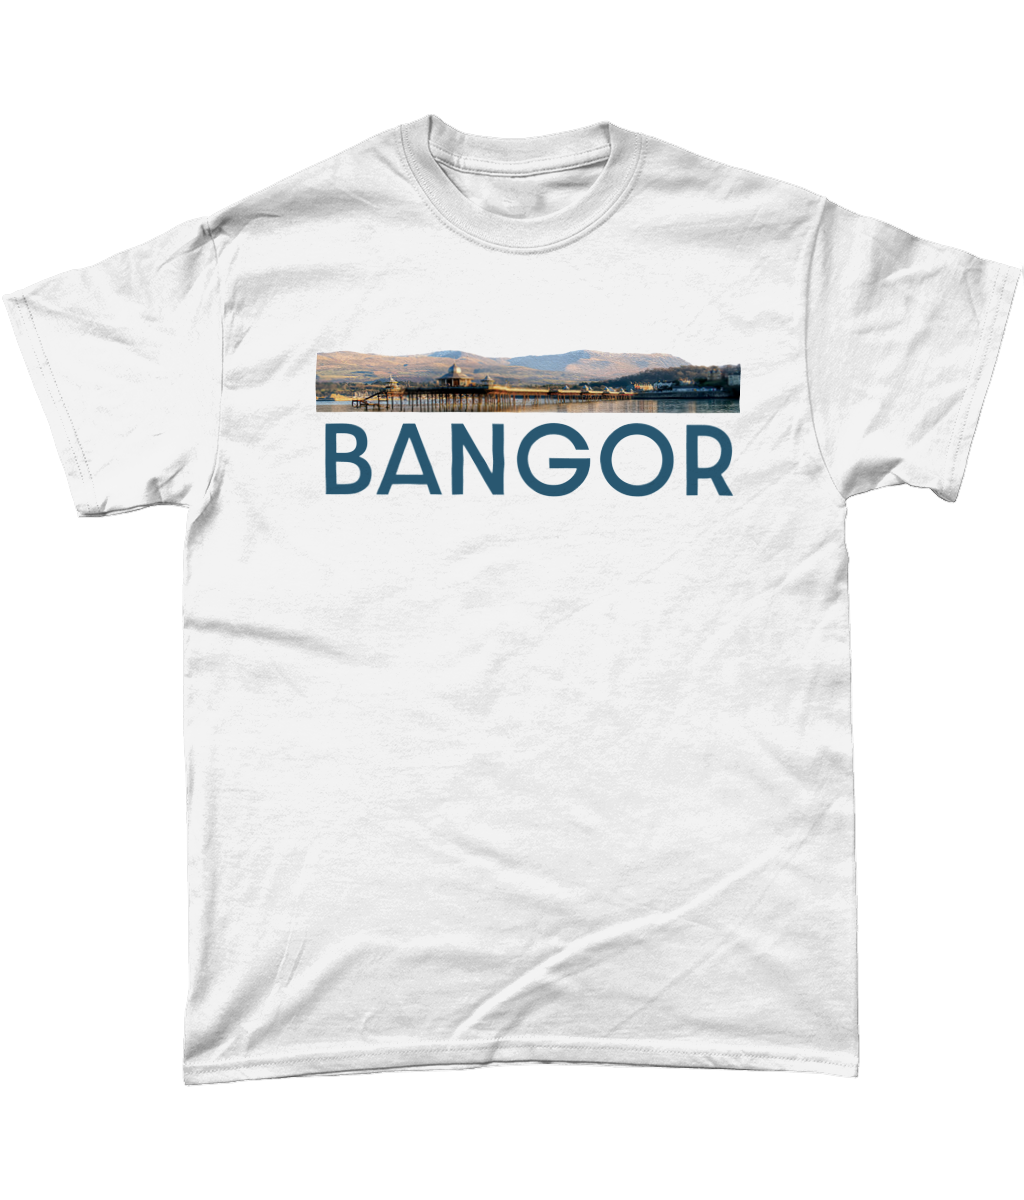 BANGOR - Crys-T